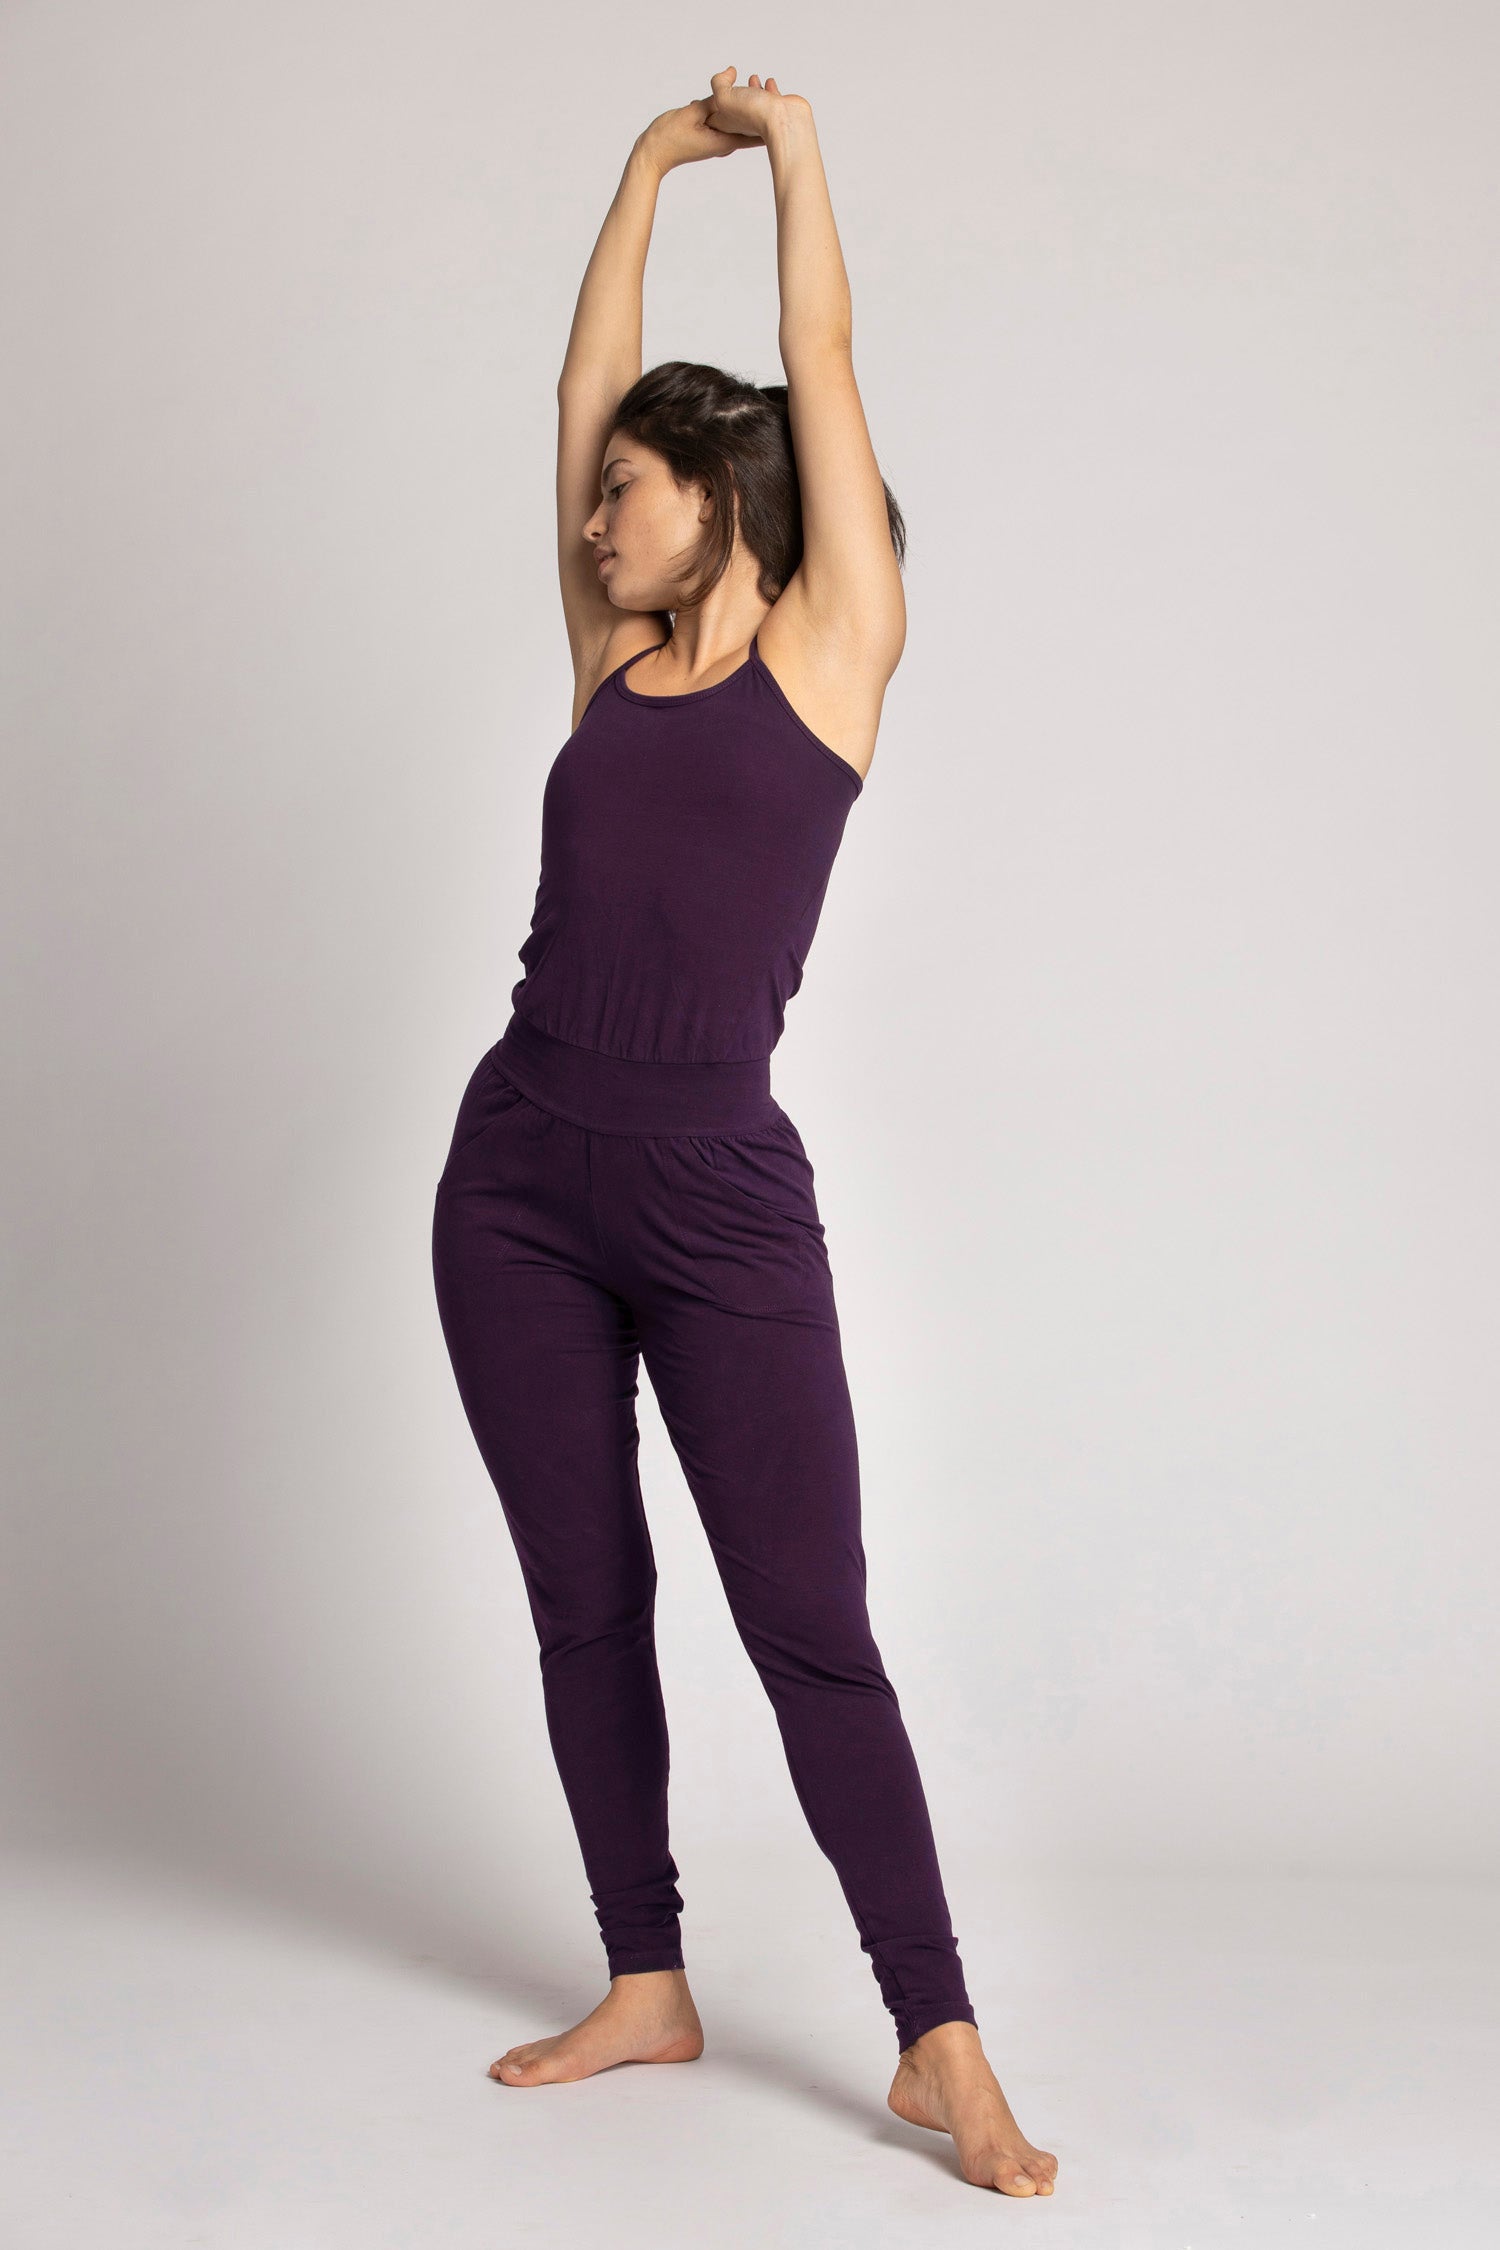 Nike Yoga jumpsuit in burgundy | ASOS | Jumpsuit, Yoga jumpsuit, Nike yoga